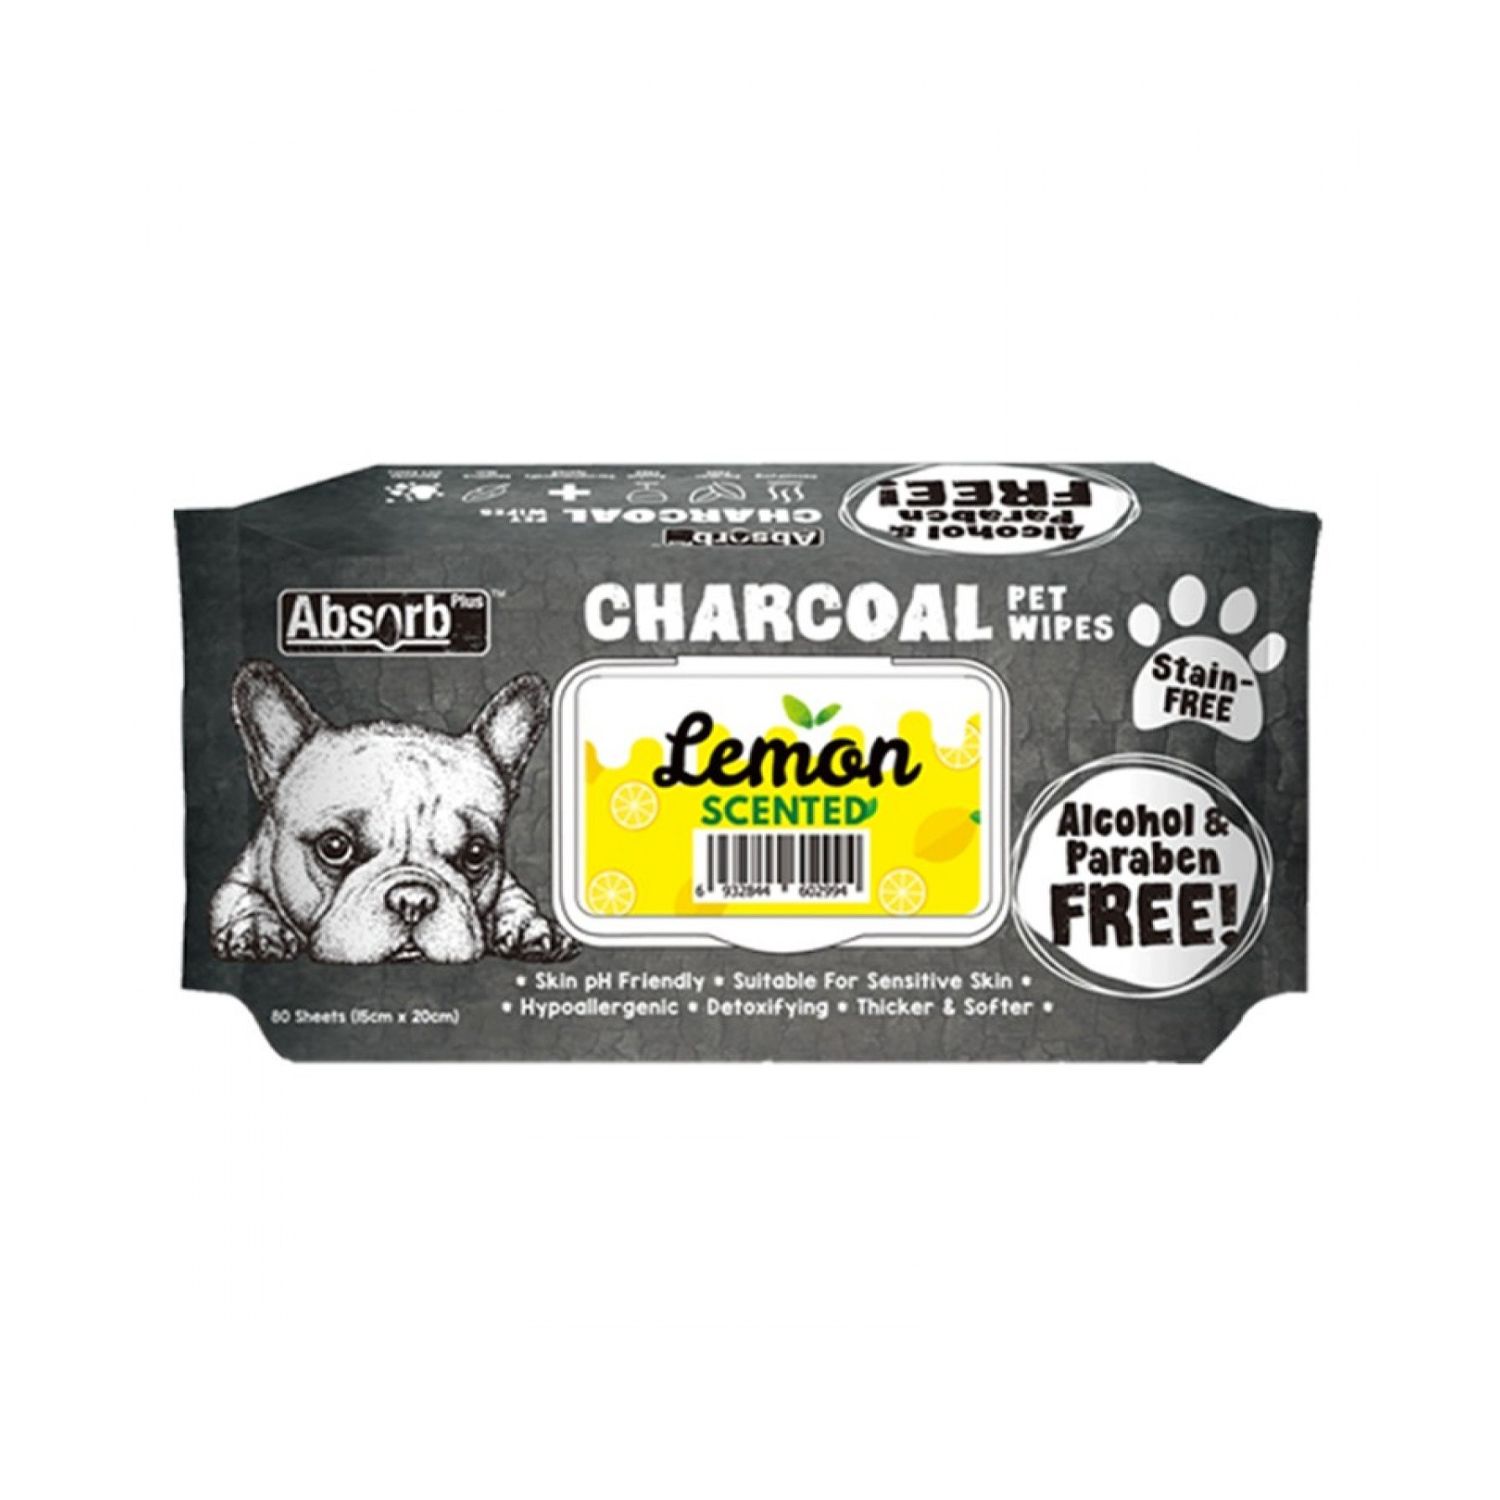 Absolute Pet Absorb Plus Charcoal Pet Wipes Lemon 80 sheets